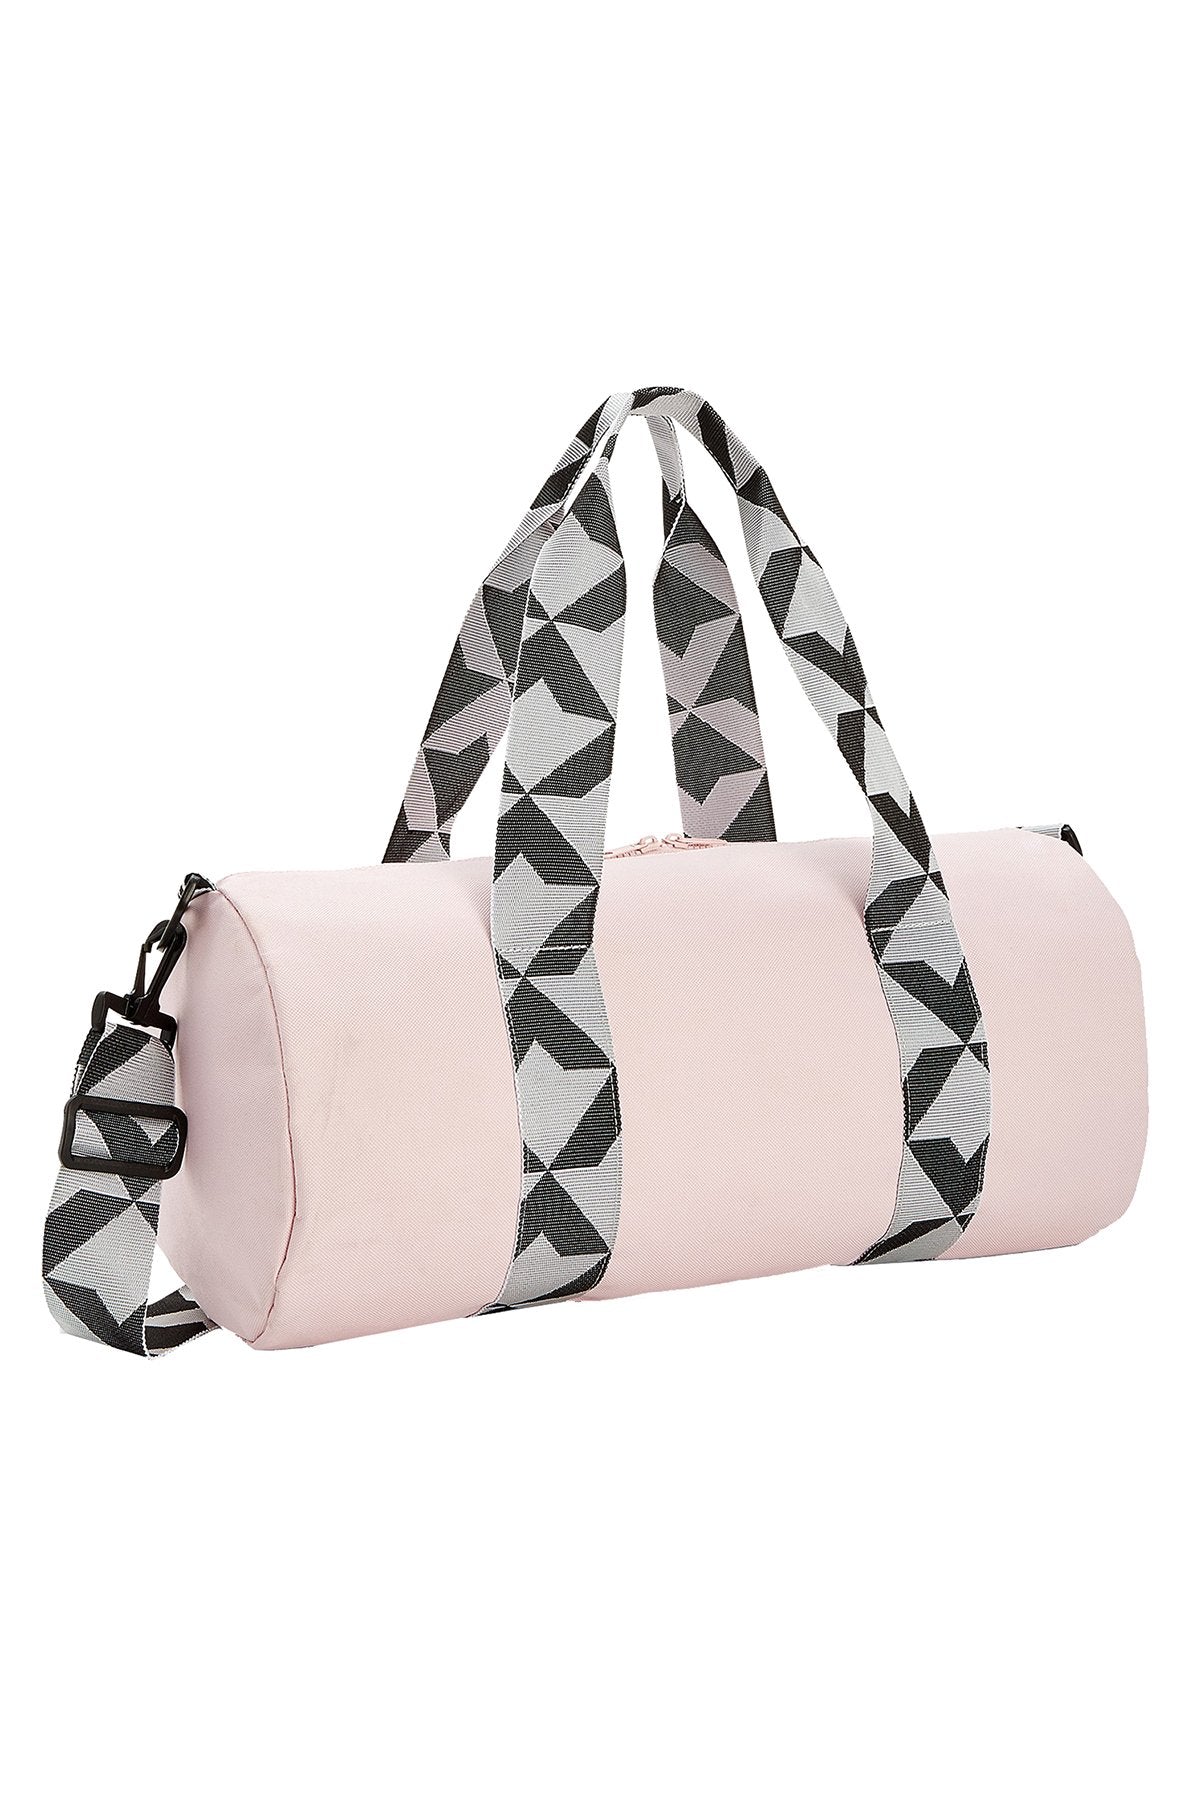 TwelveNYC Light-Pink/Geometric-Print Gym Duffle Bag